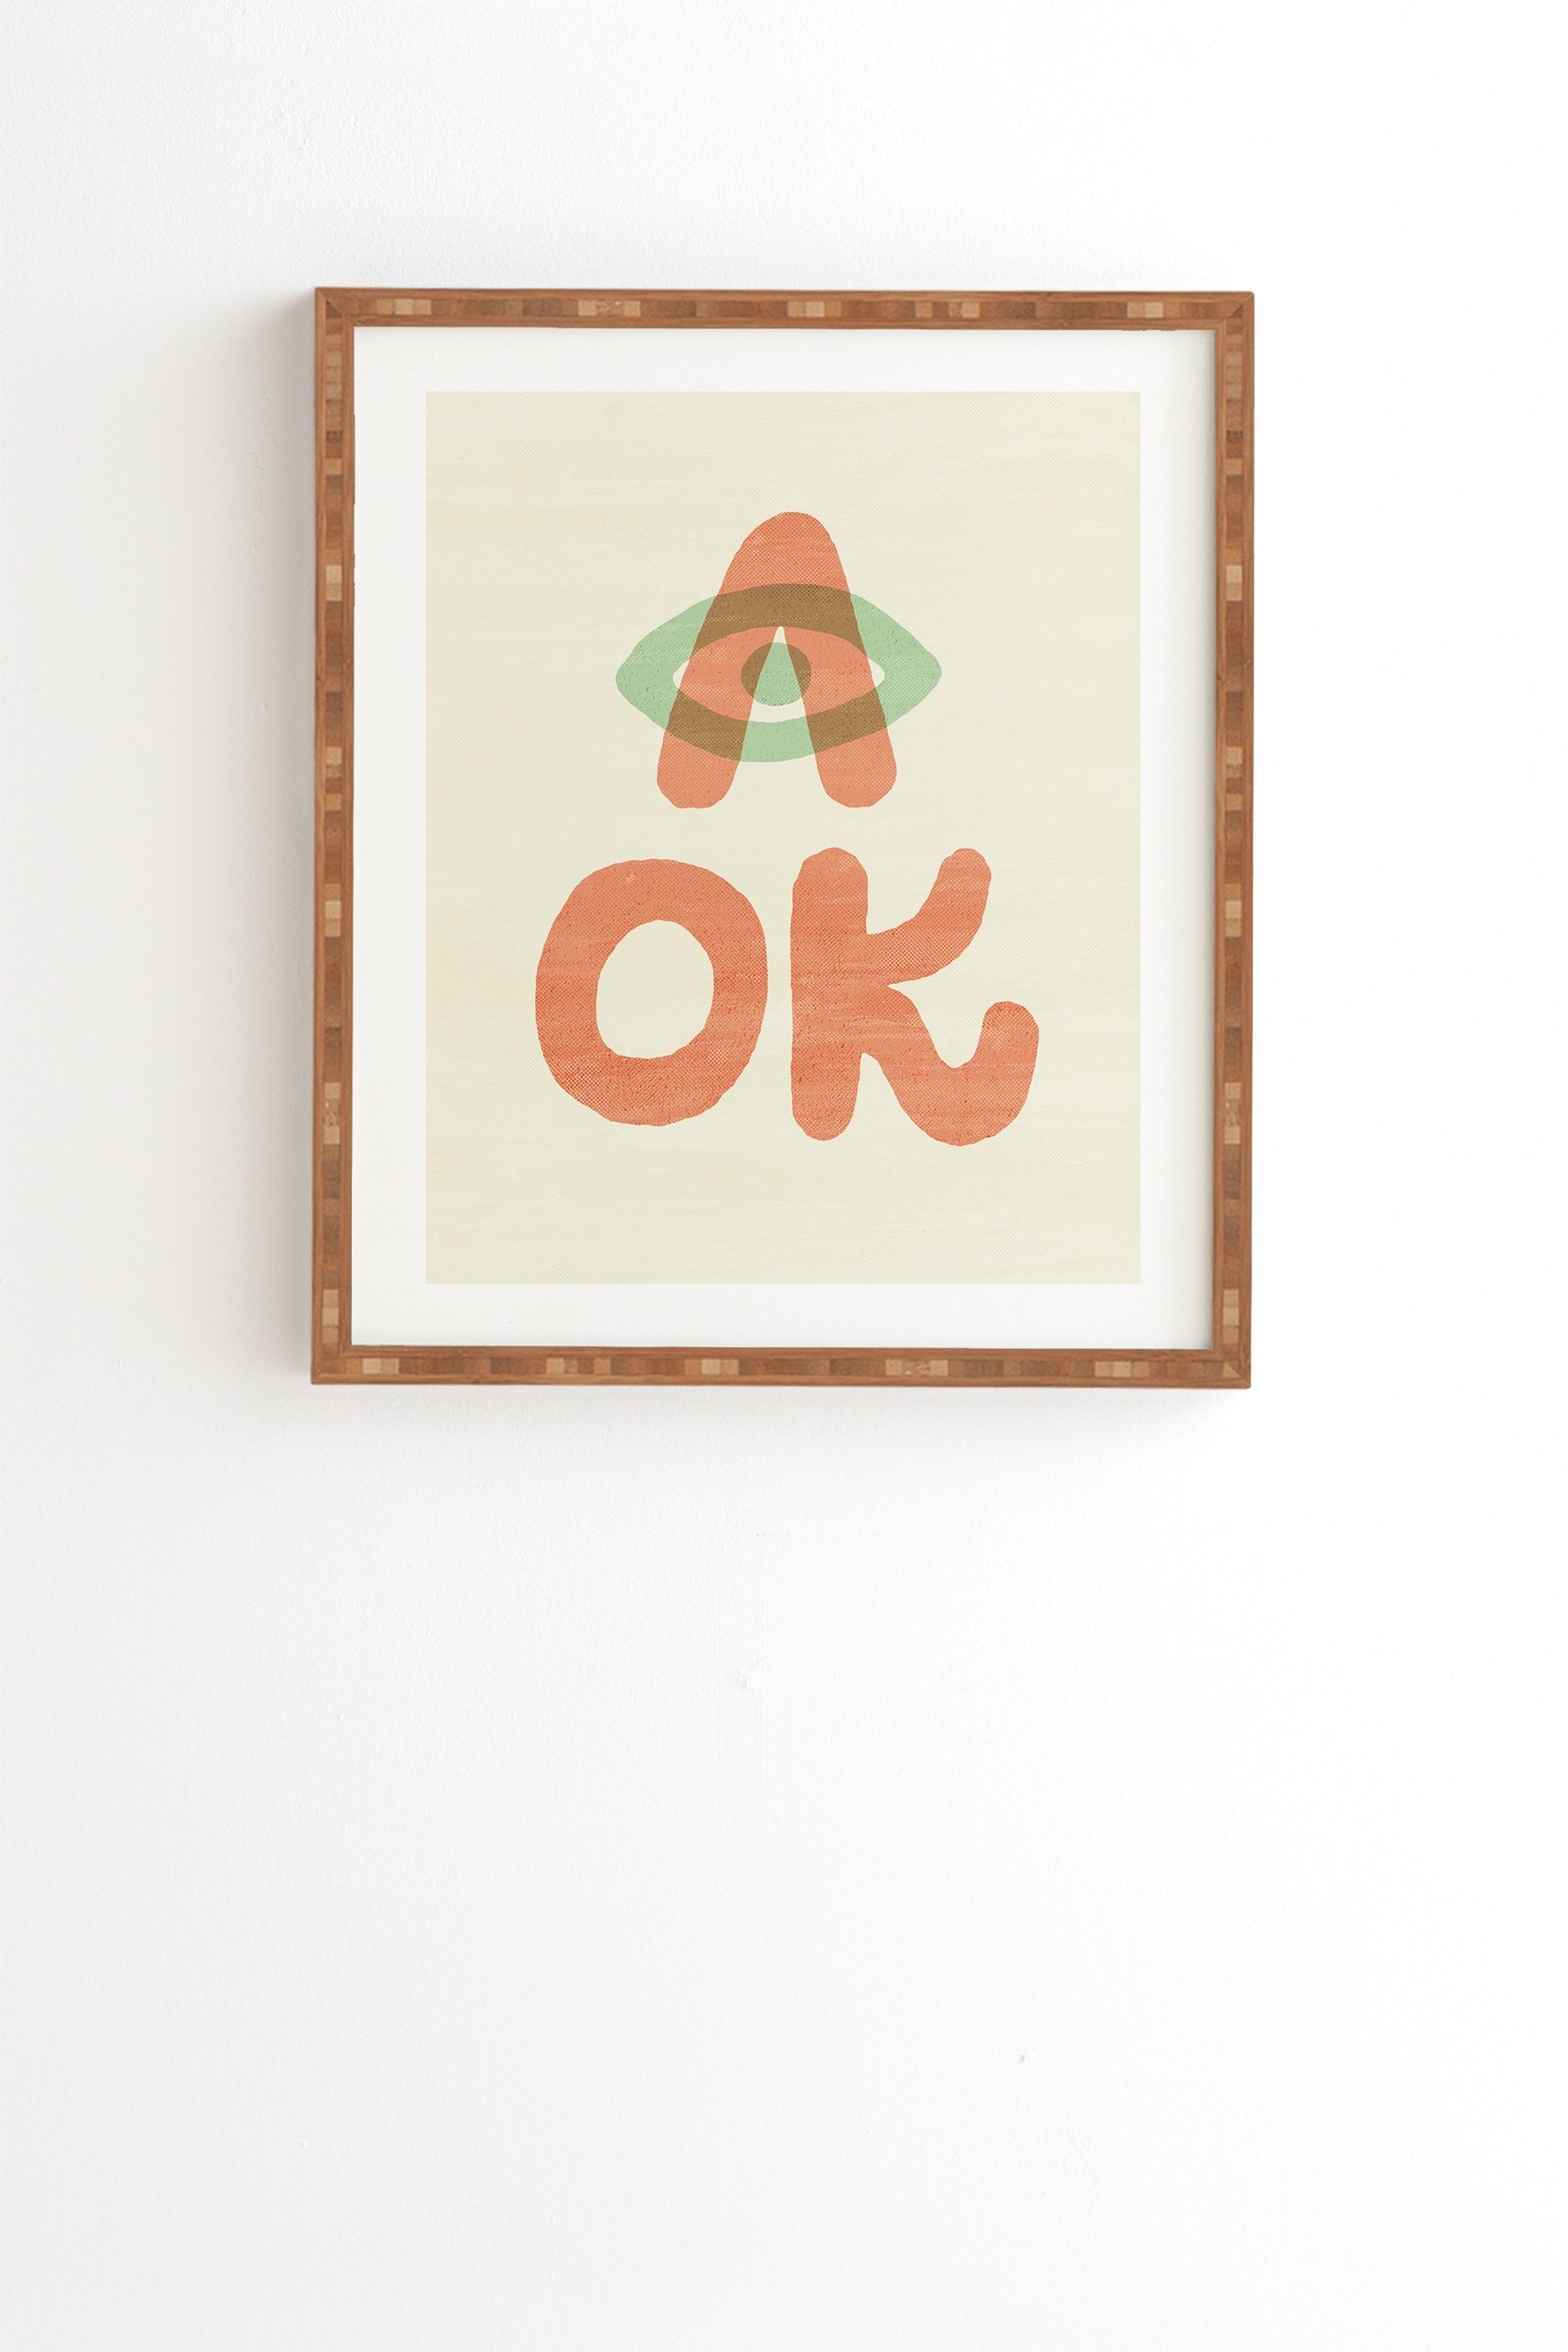 A OK By Nick Nelson- 19 x 22.4 - Wander Print Co.